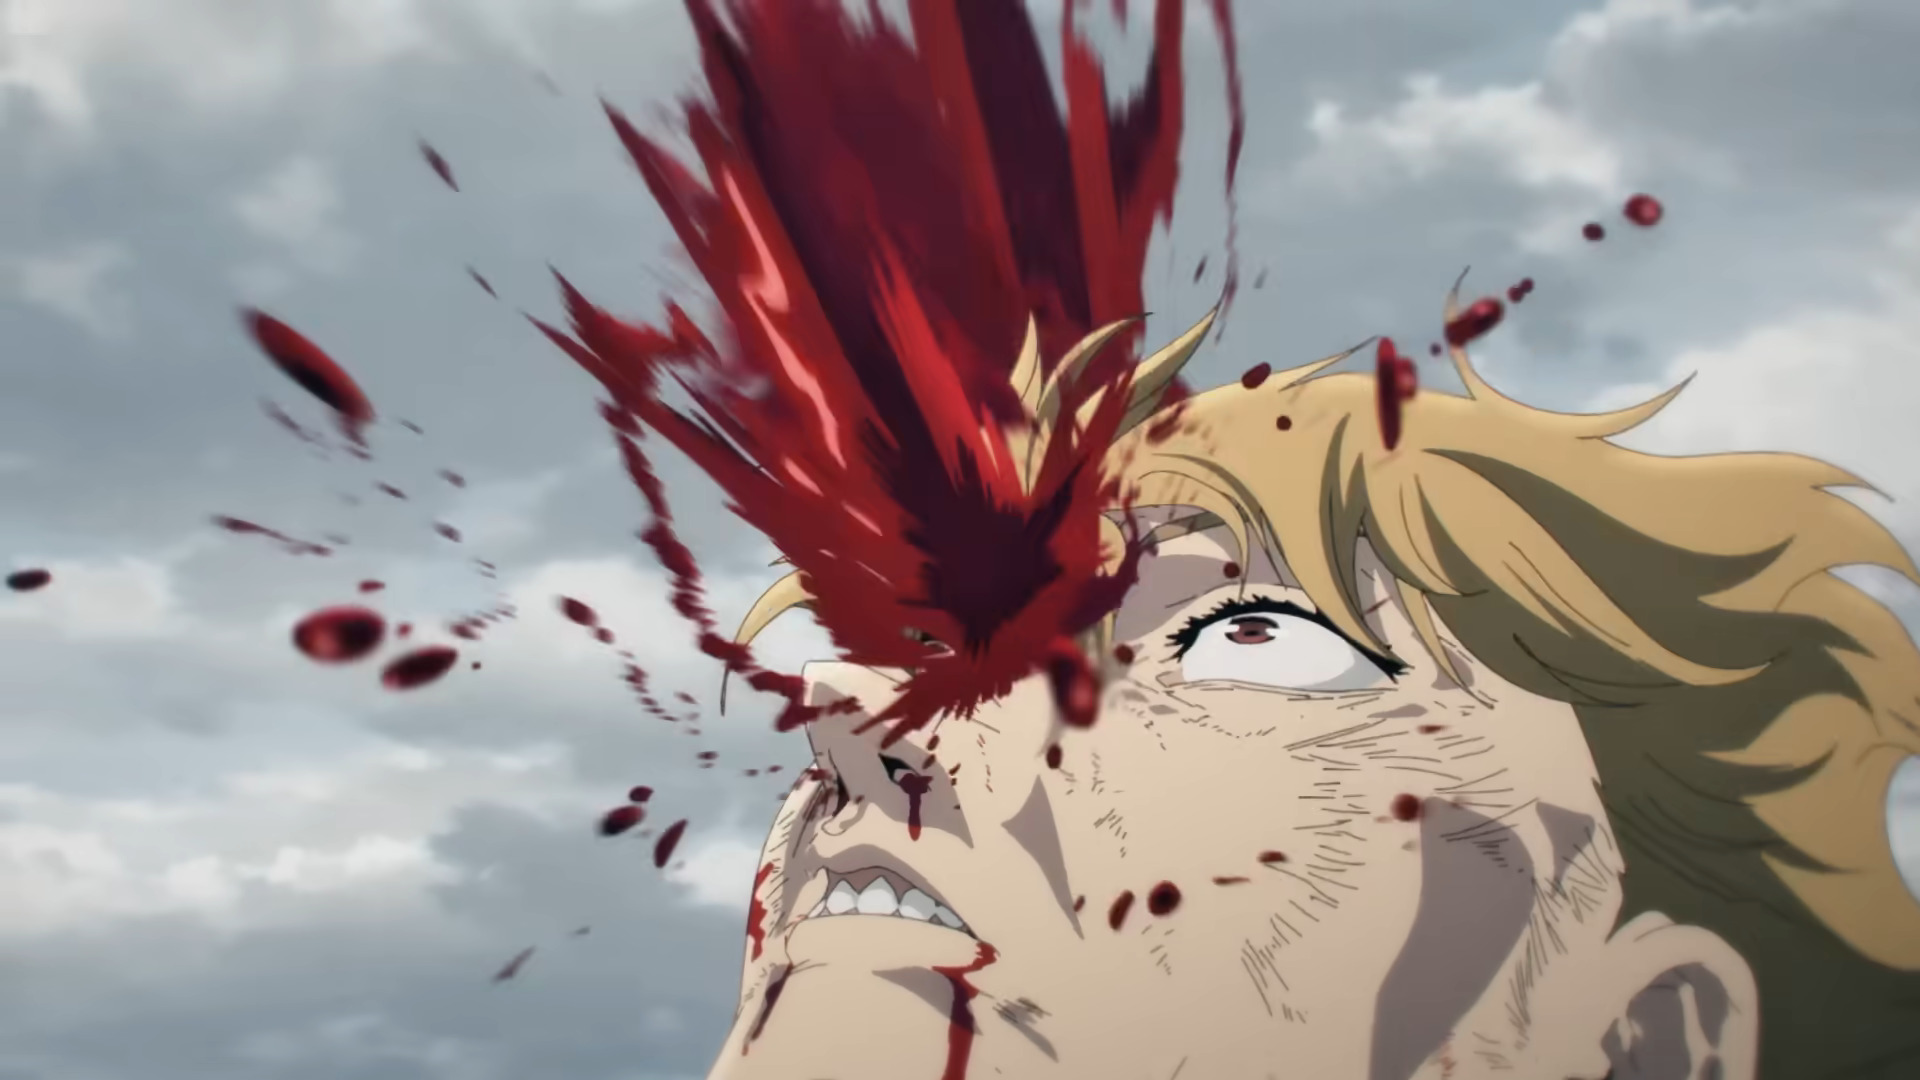 MAPPA 'Chainsaw Man' Anime First Episode Trailer